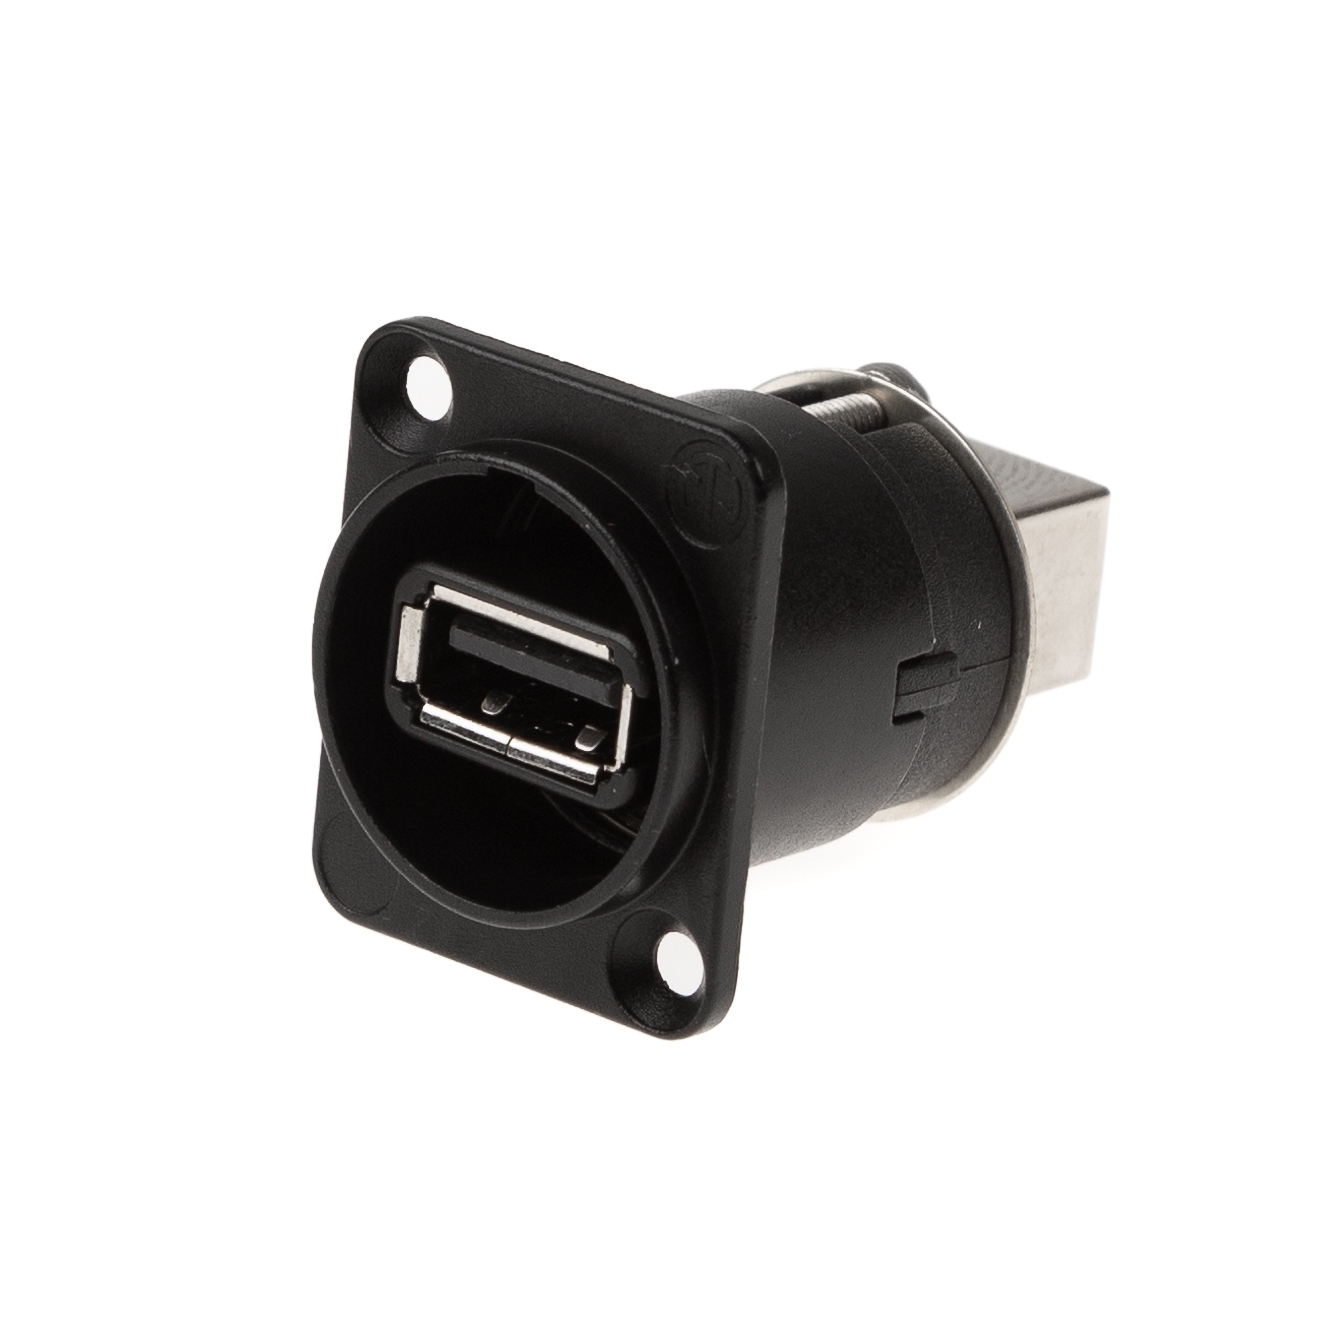 USB 2.0 Einbauadapter NEUTRIK Typ NAUSB-W-B, D-Gehäuse Metall, schwarz (alte Art.-Nr. CU-ADAP-21)